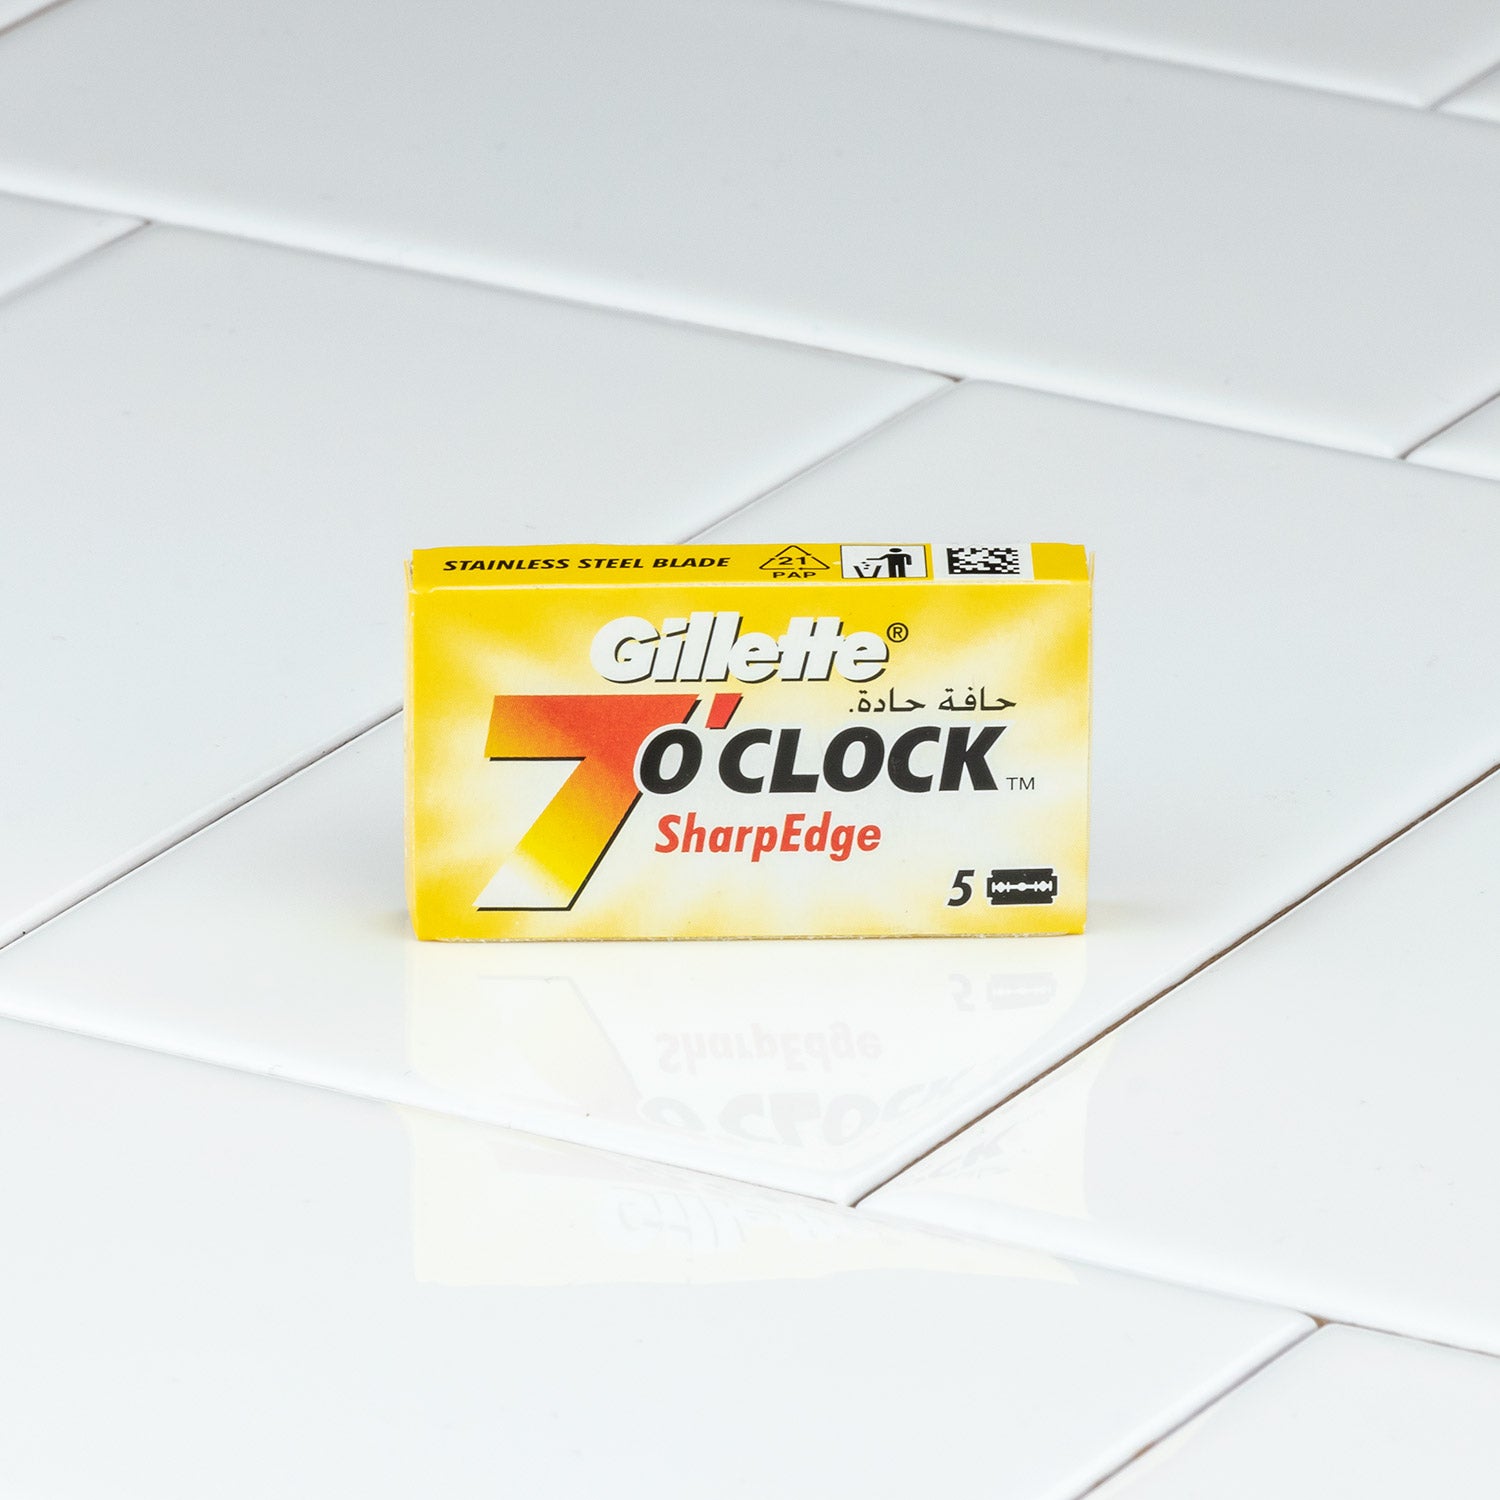 Gillette 7 O'Clock SharpEdge Yellow Double Edge Razor Blades, 5 Pack